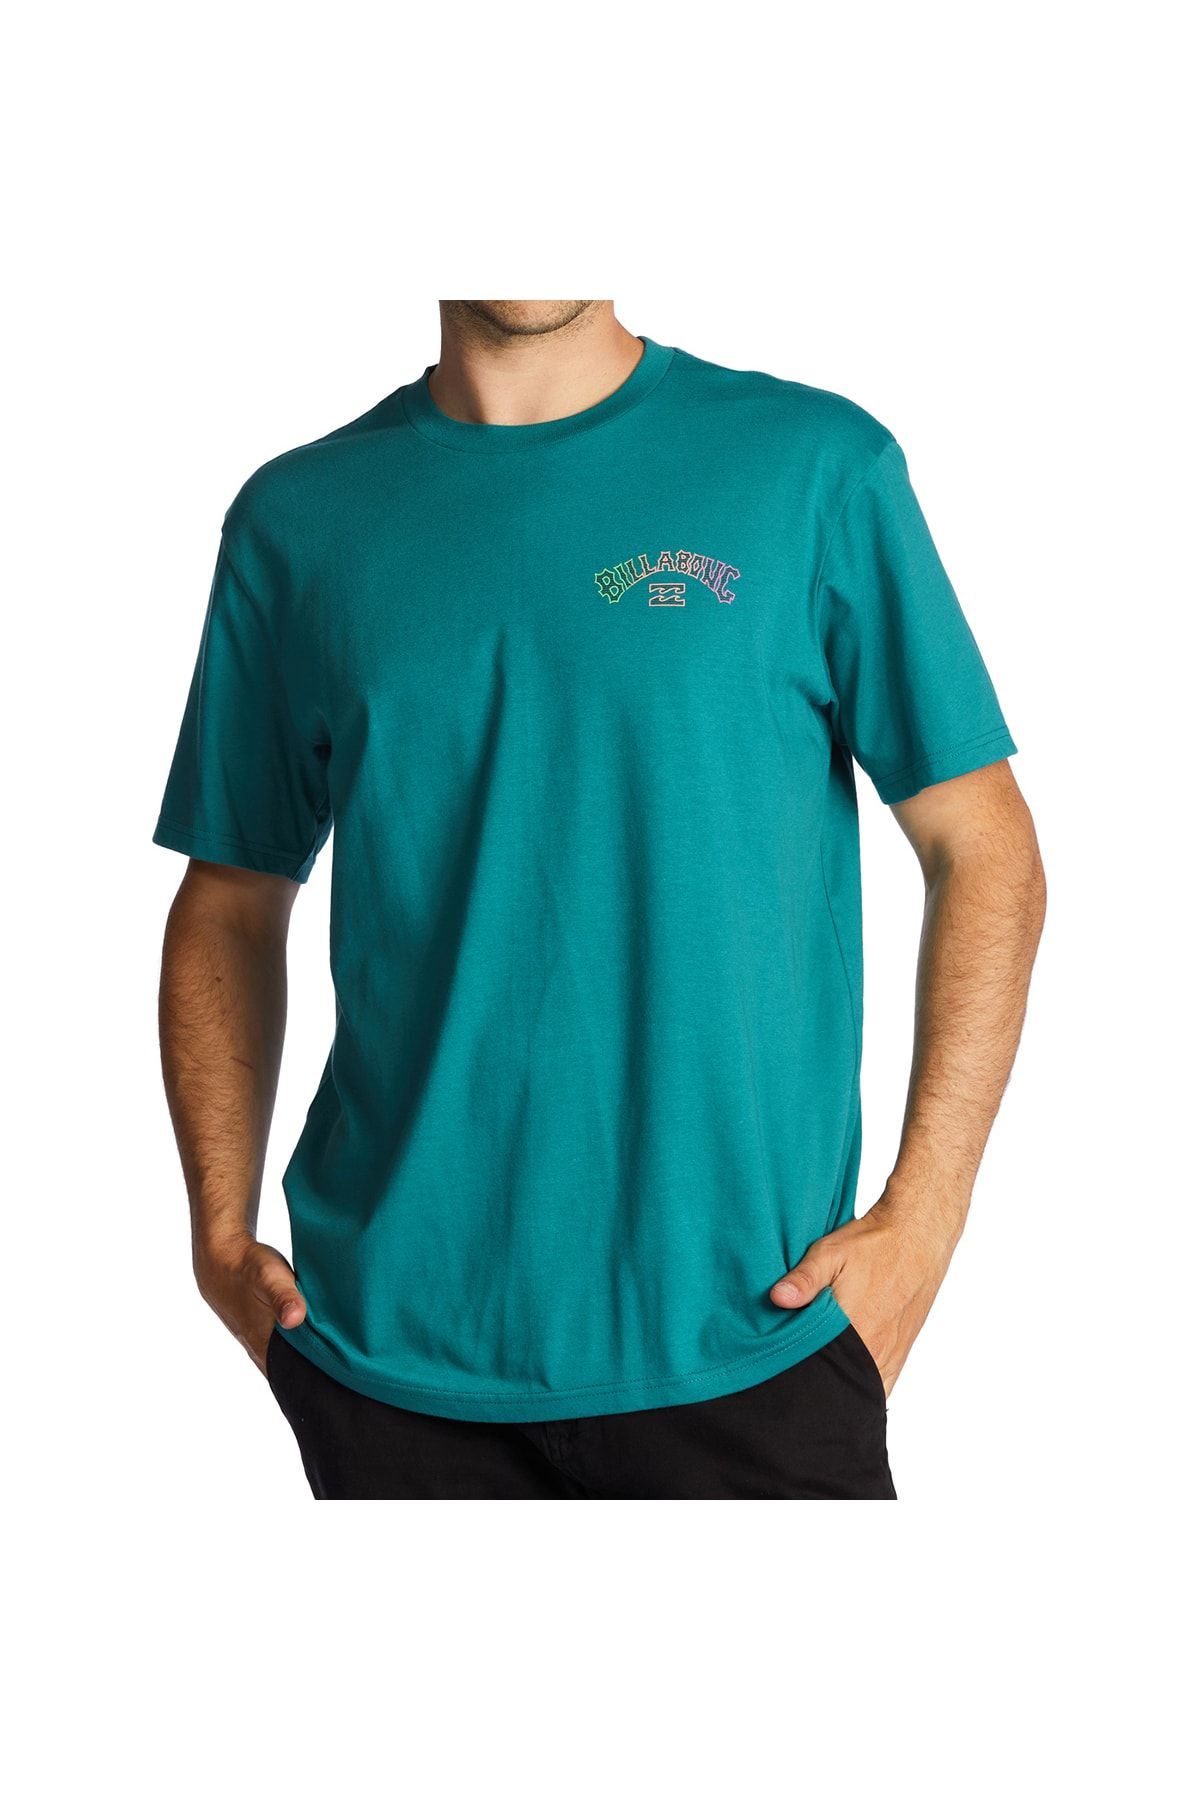 Billabong Arch Fill Ss Erkek Çok Renkli Günlük Stil T-shirt Abyzt01696-tea